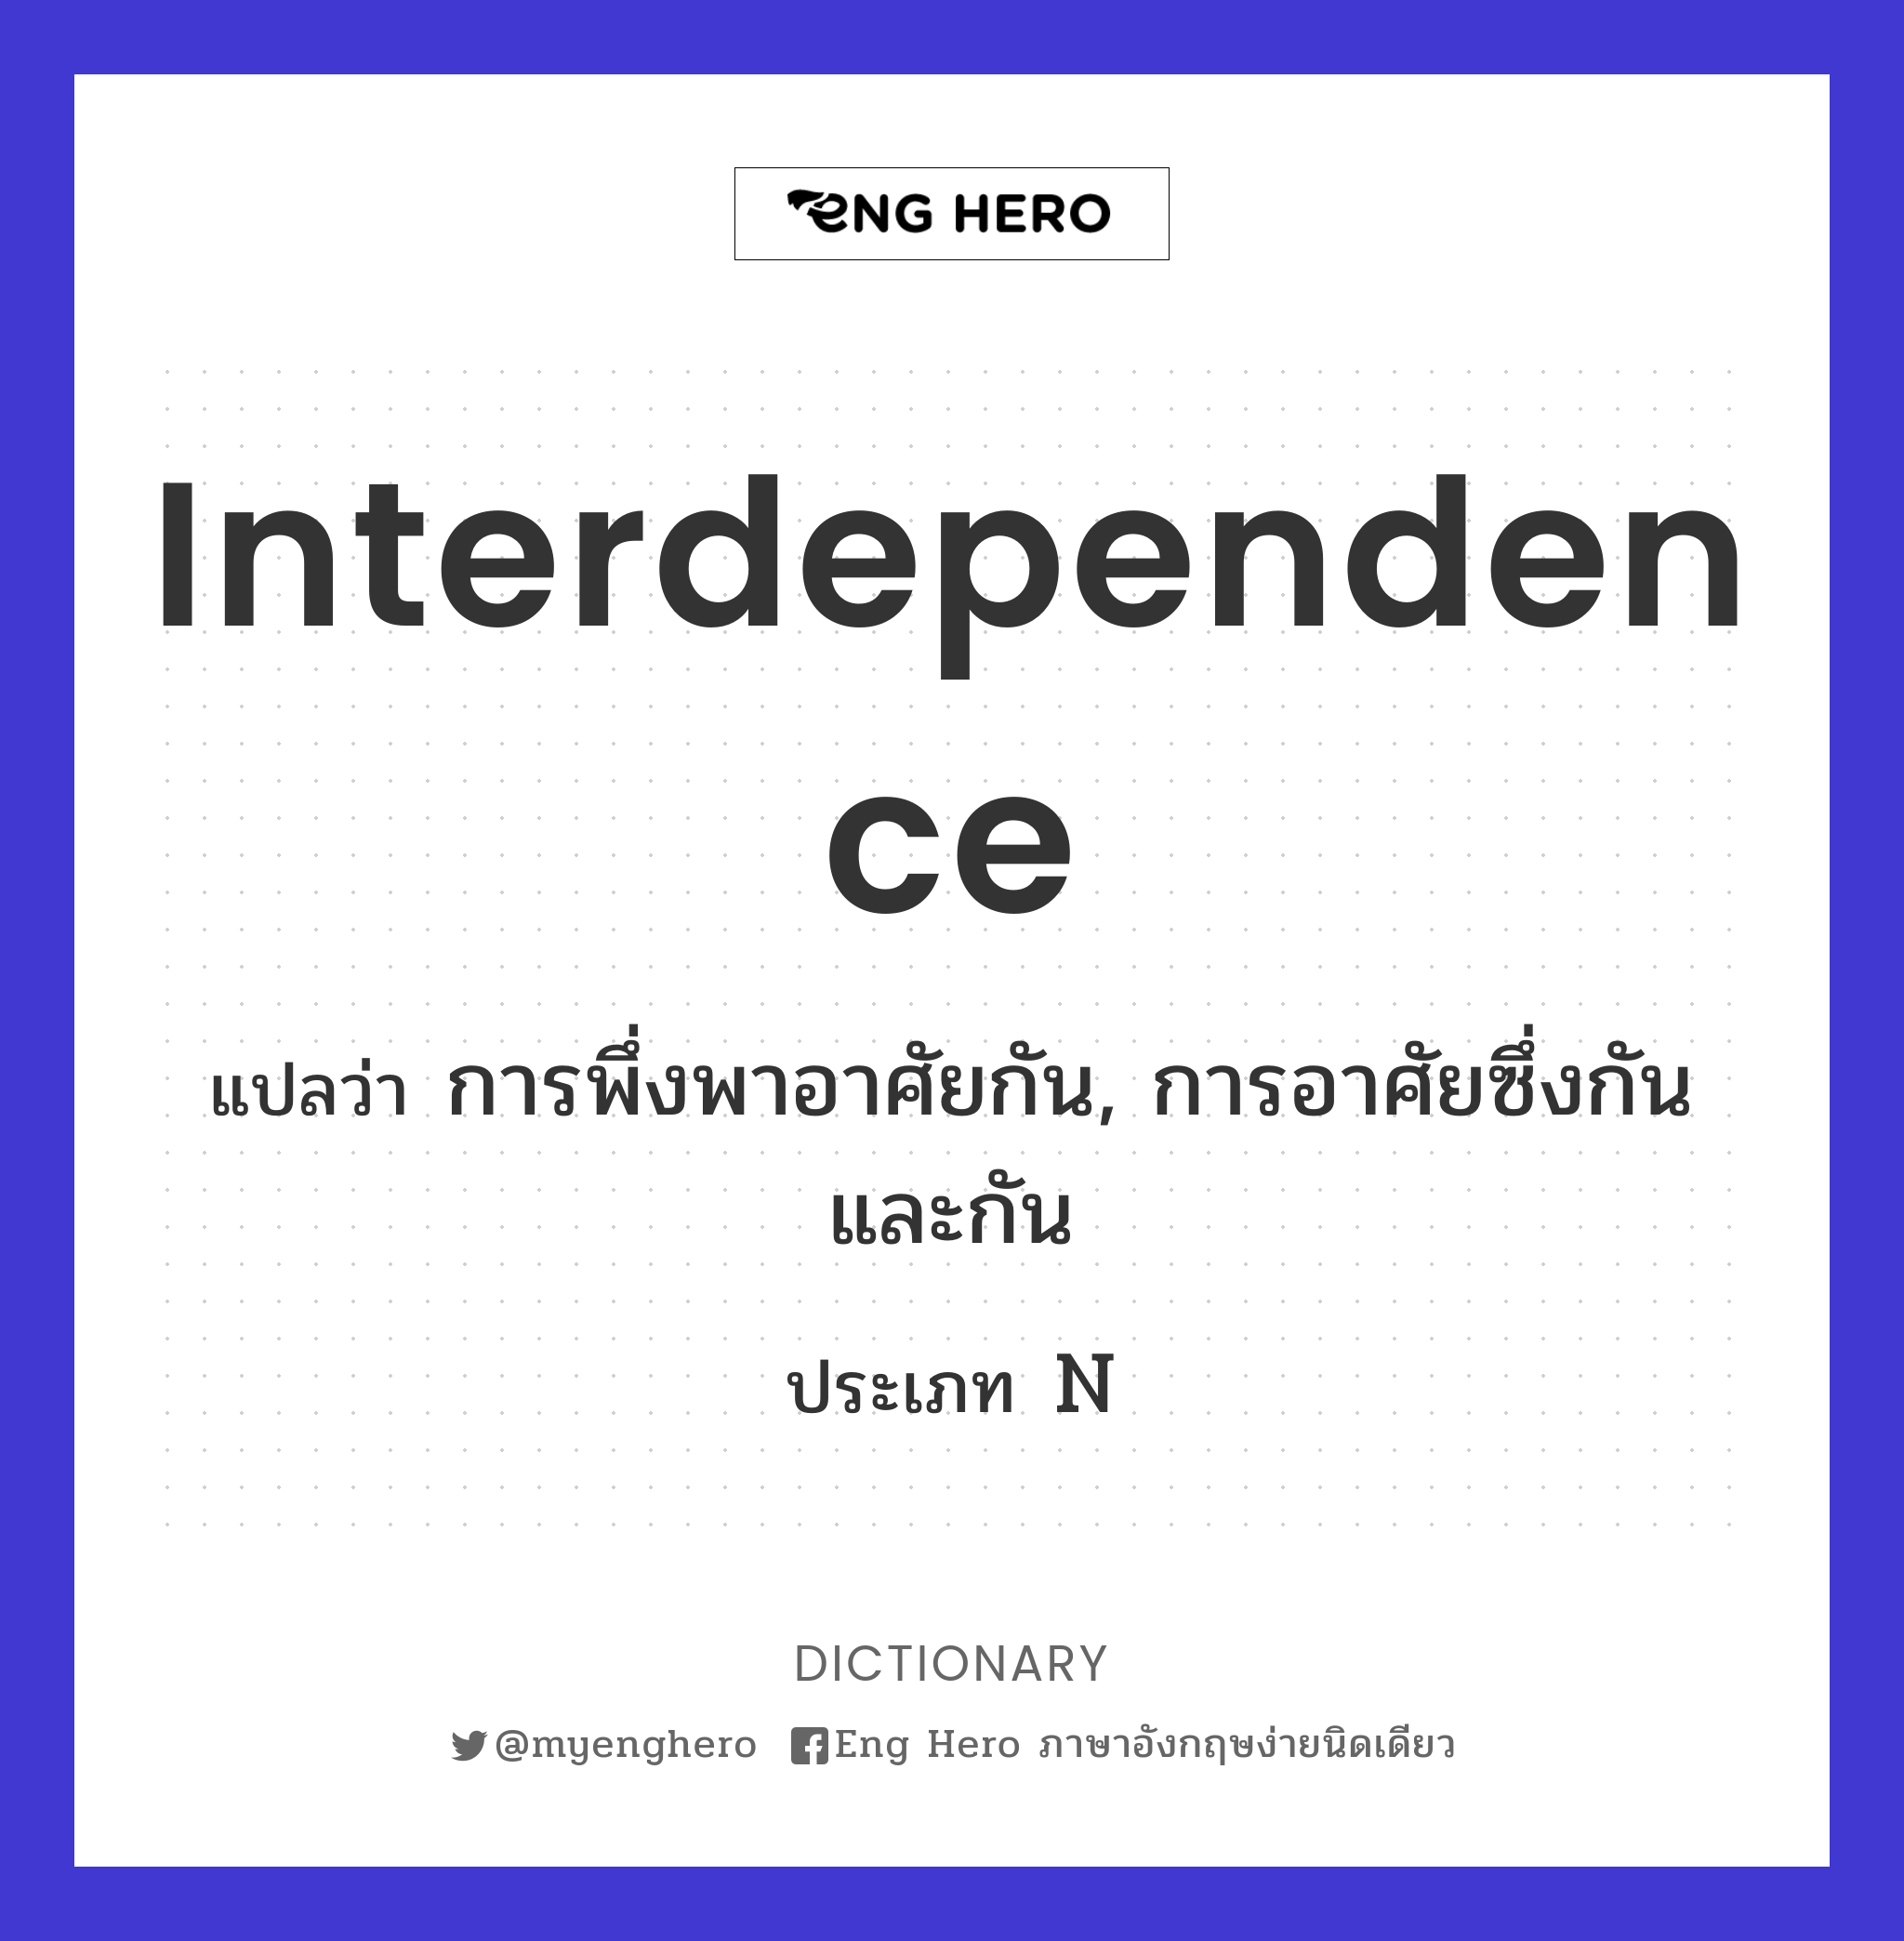 interdependence